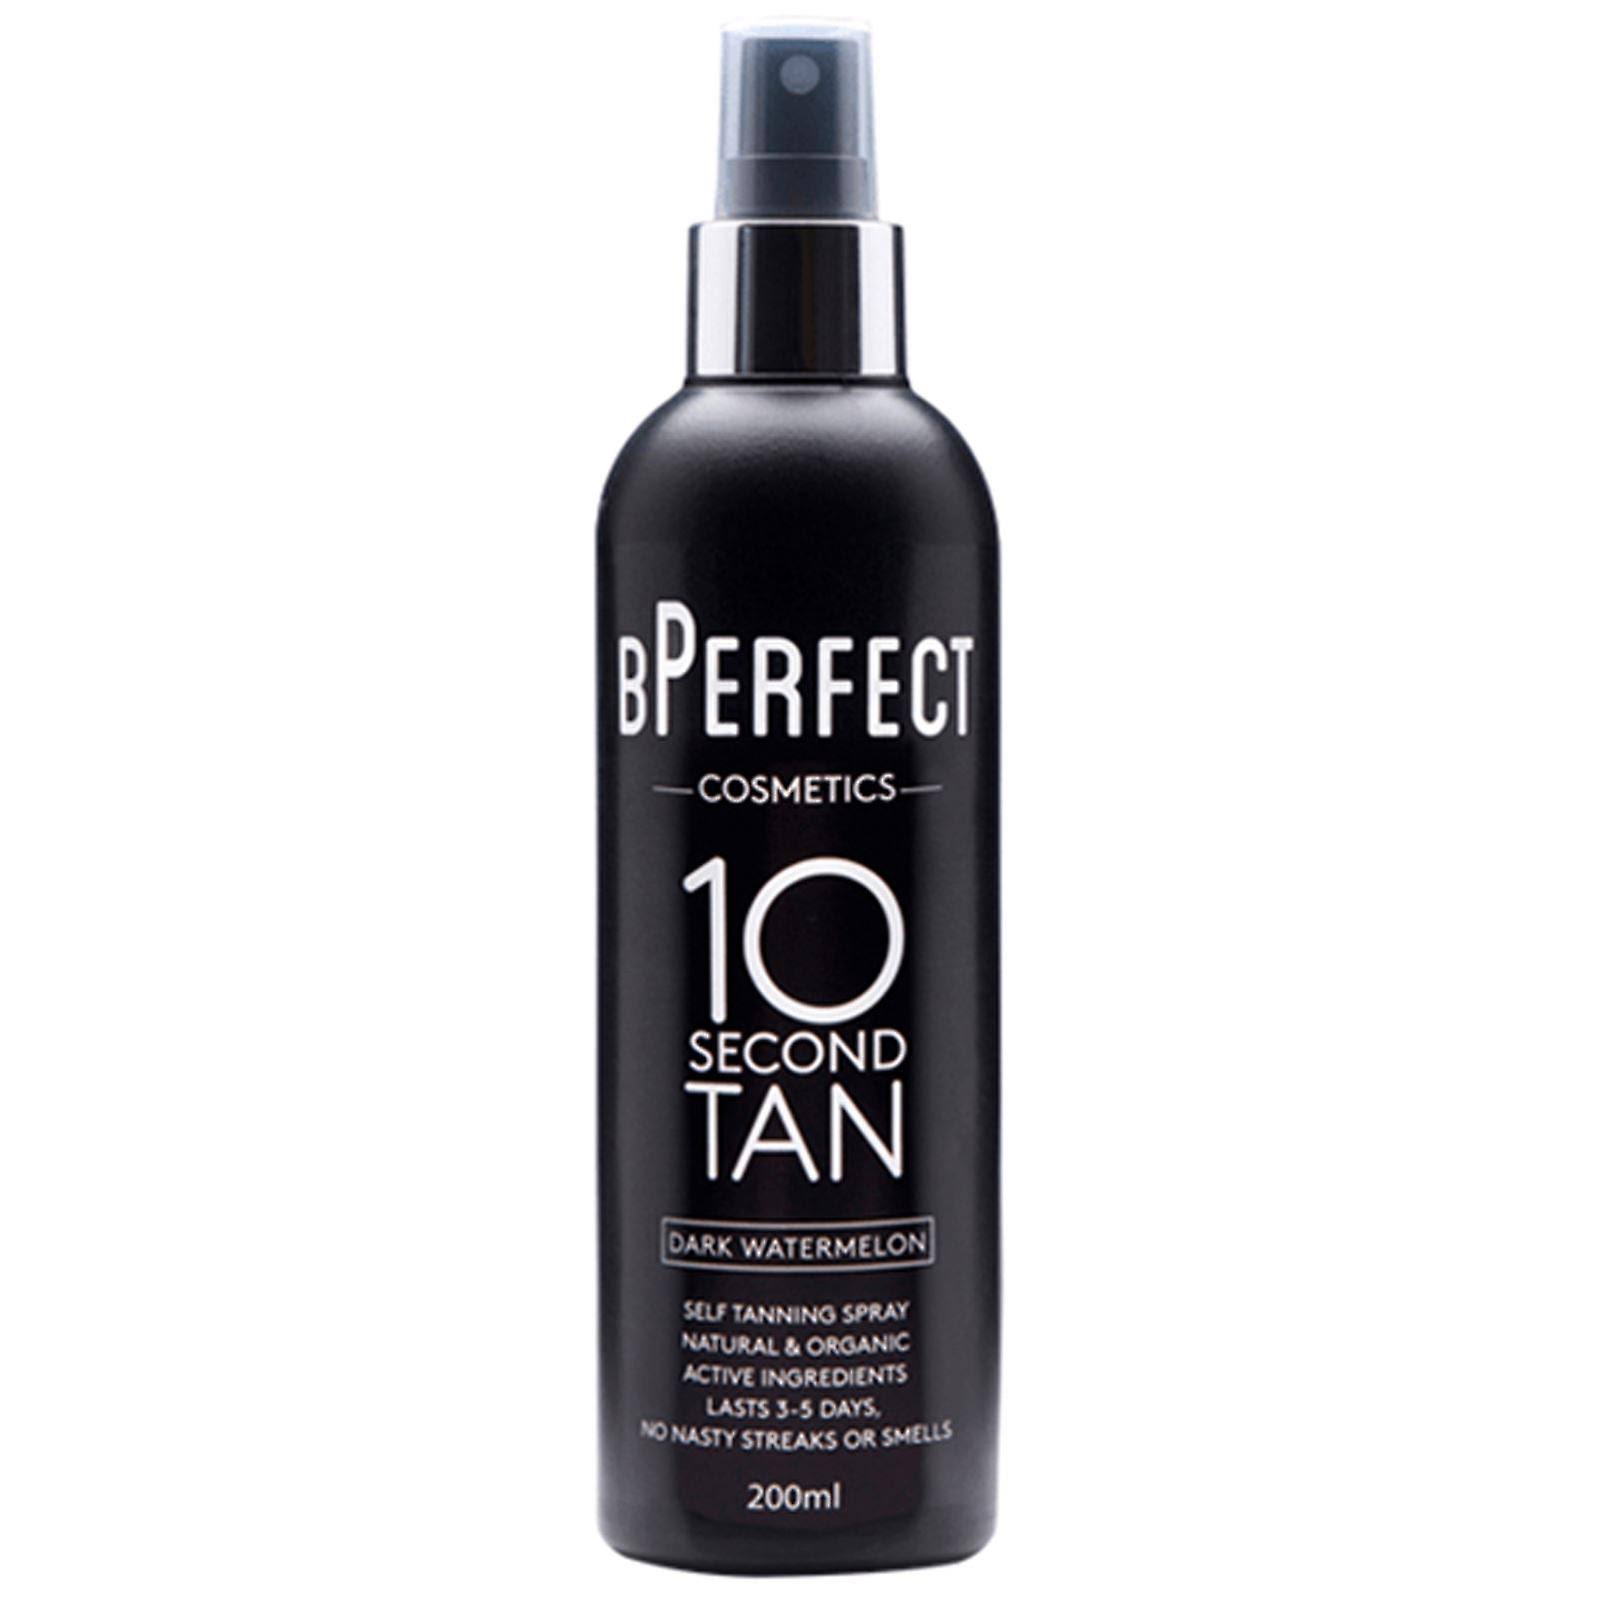 BPerfect 10 Second Tan Self Tanning Spray Dark Watermelon